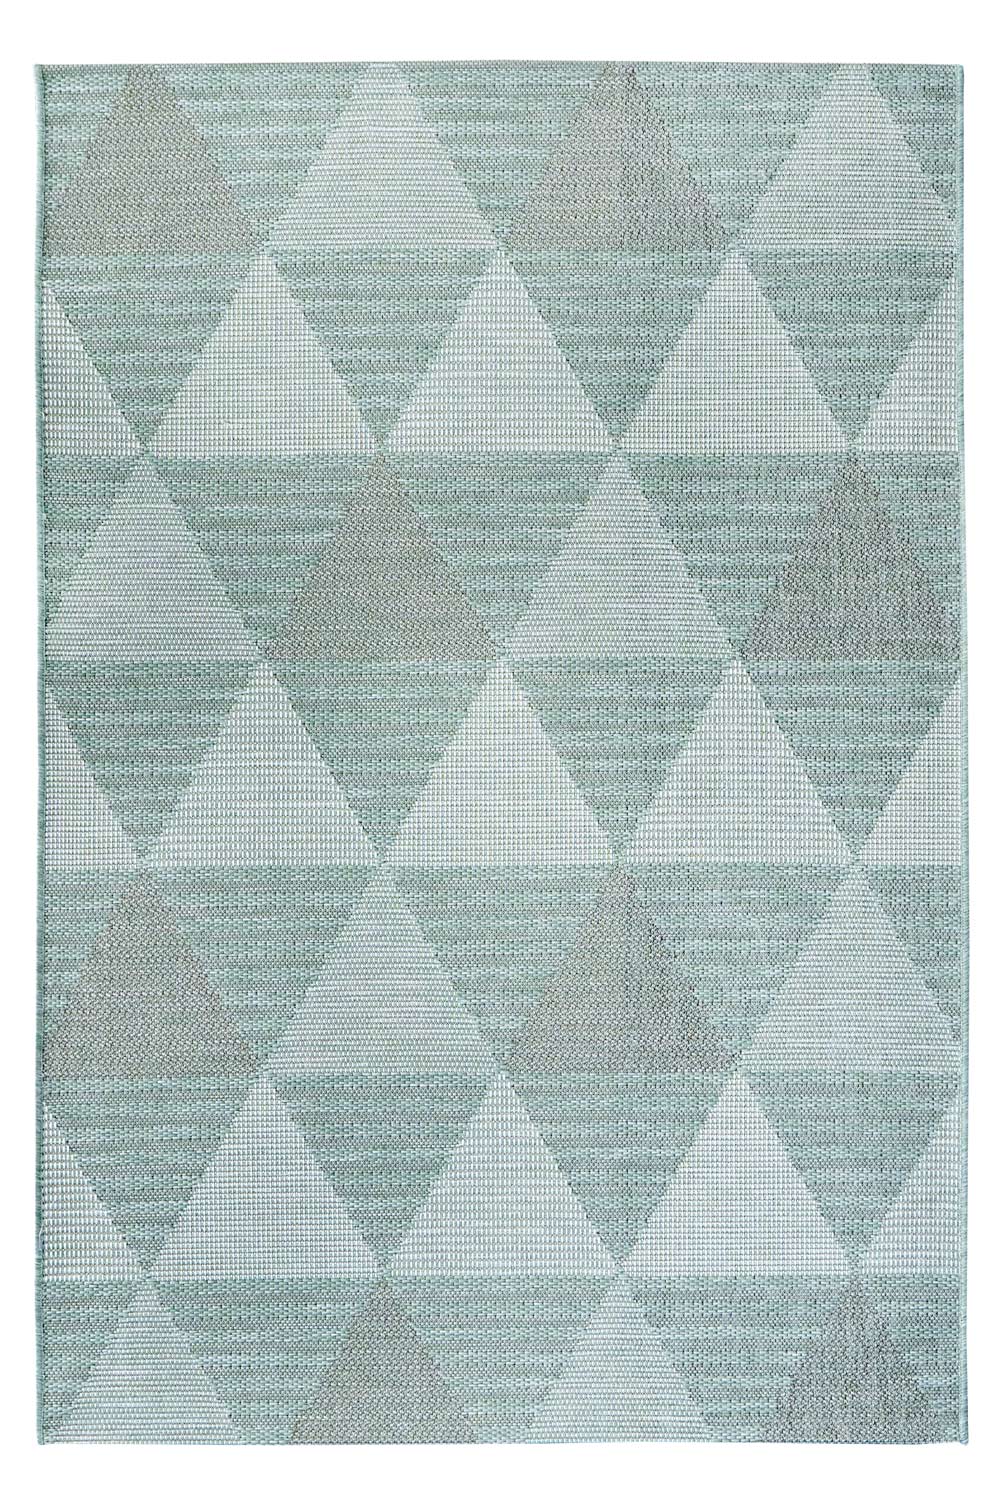 Kusový koberec Flat 21132 Ivory Silver/Mint 140x200 cm